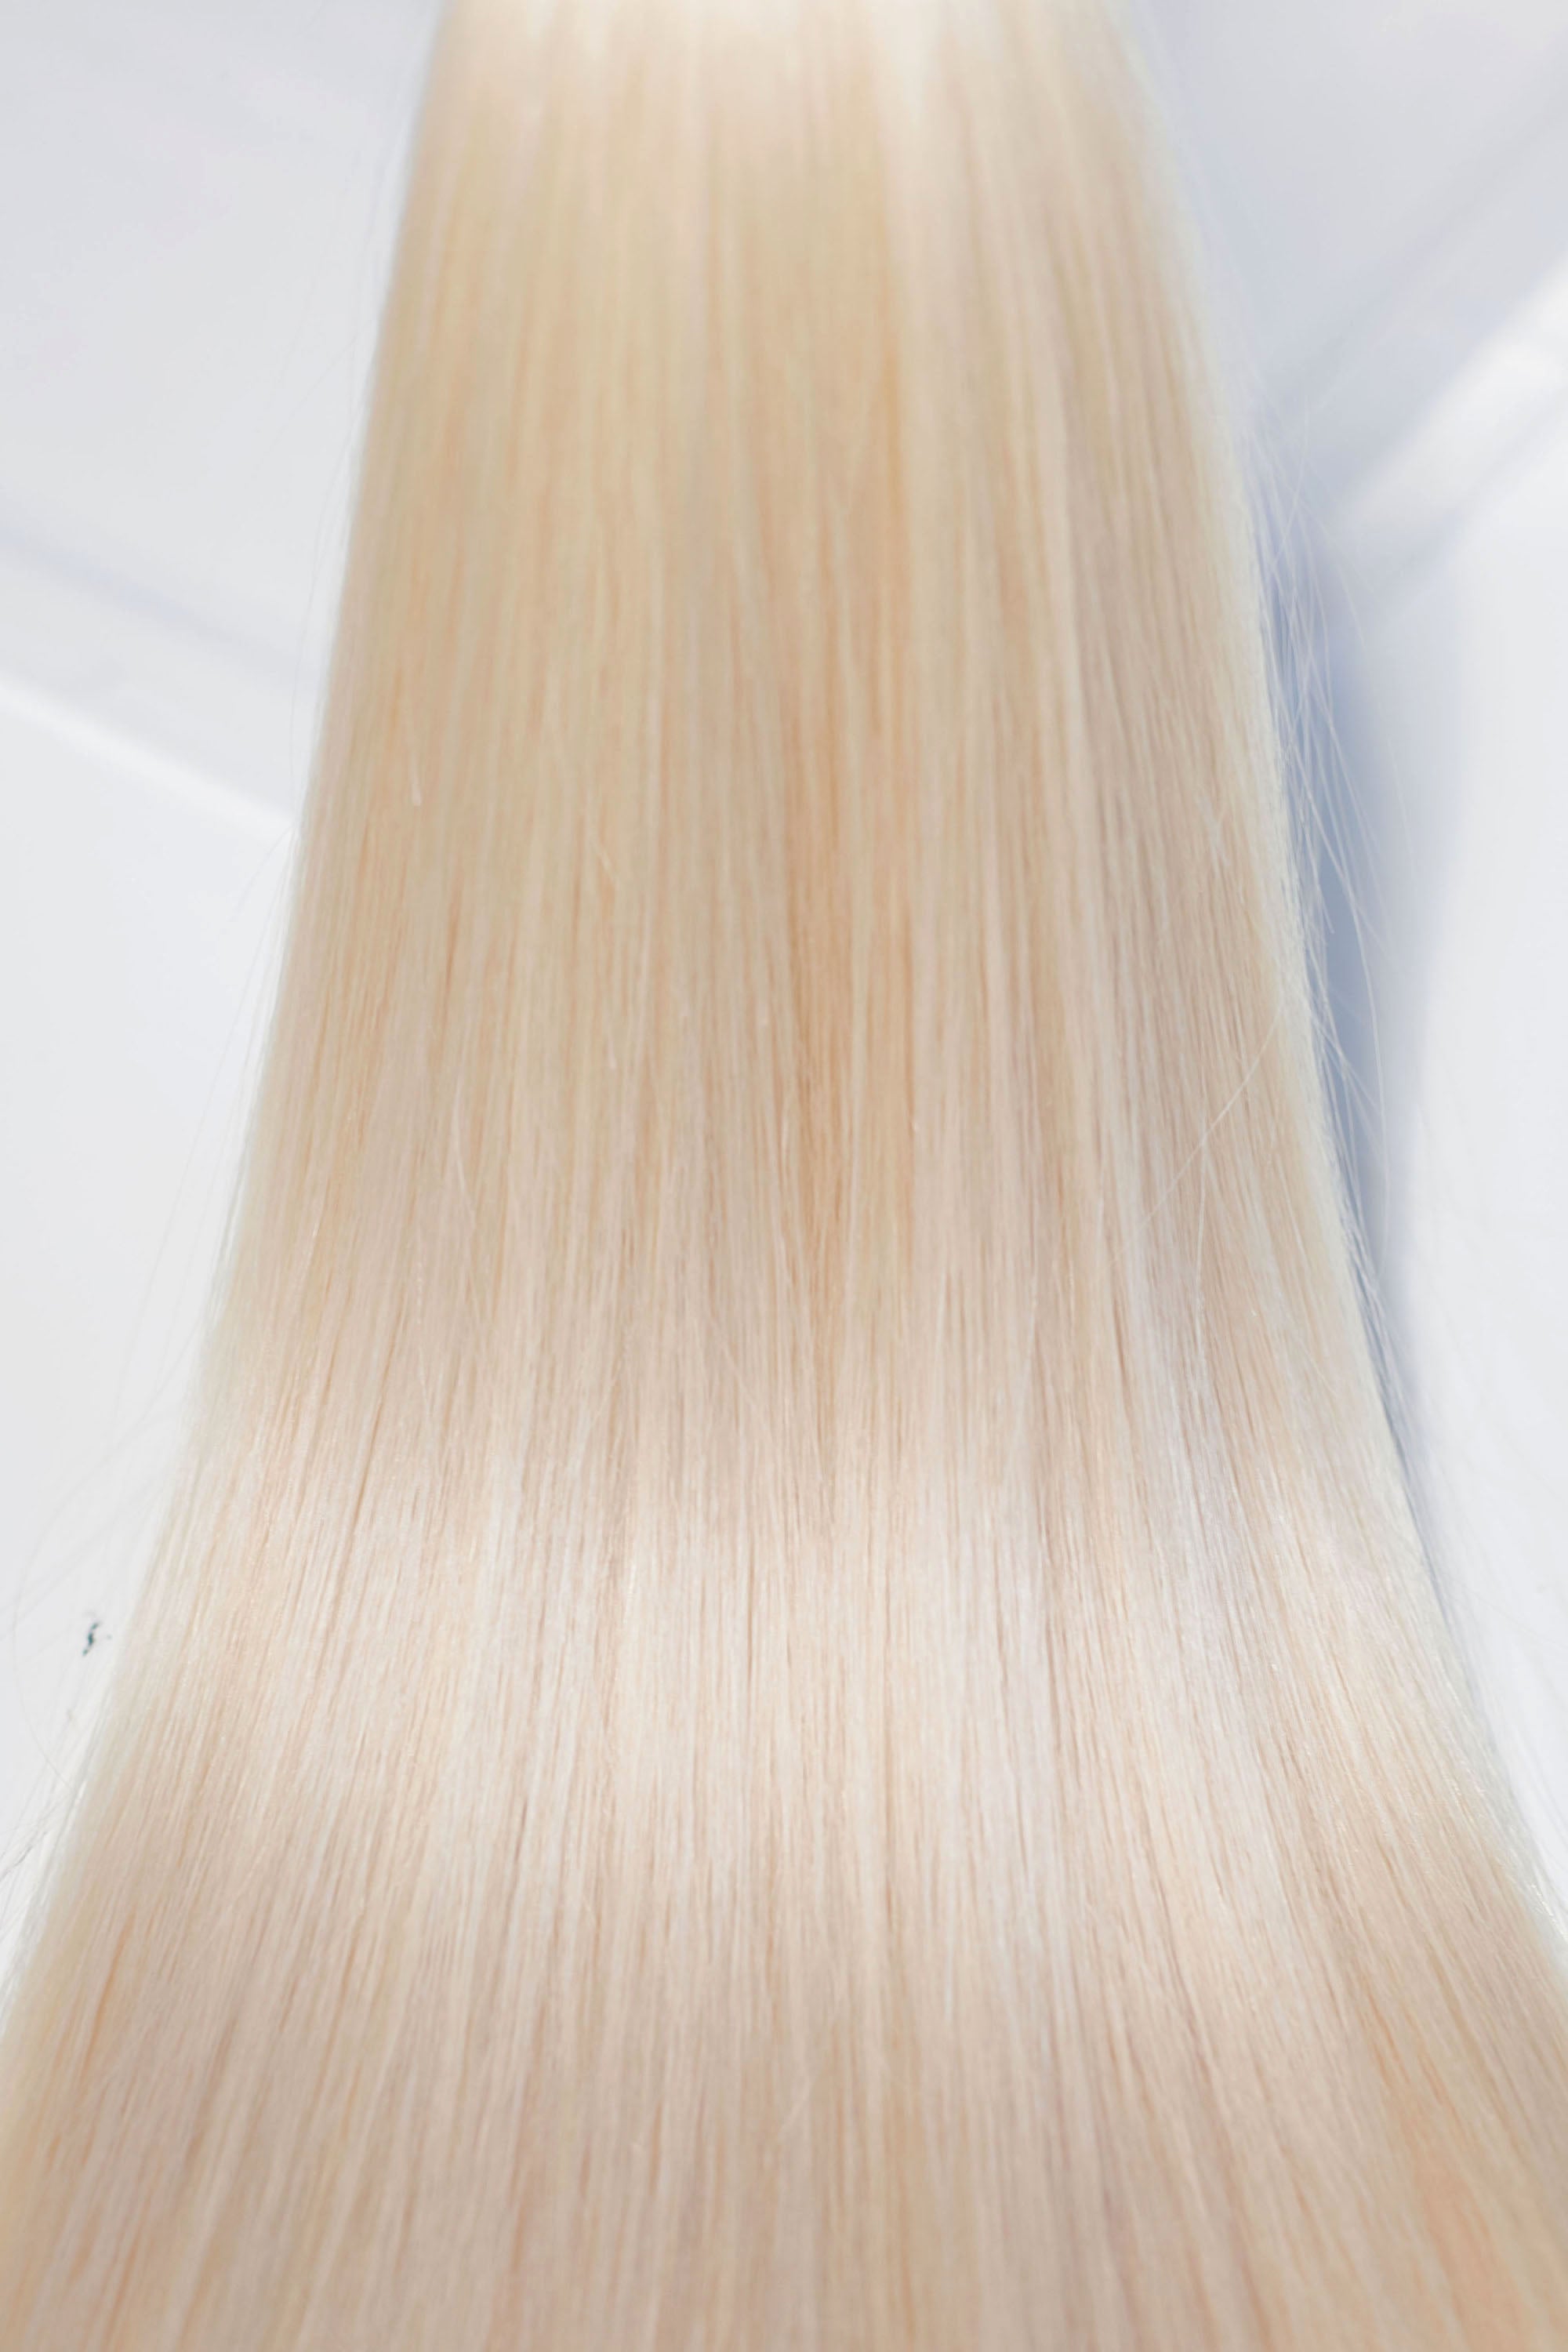 Behair professional Keratin Tip "Premium" 24" (60cm) Natural Straight Ice Blond #000 - 25g (Micro - 0.5g each pcs) hair extensions